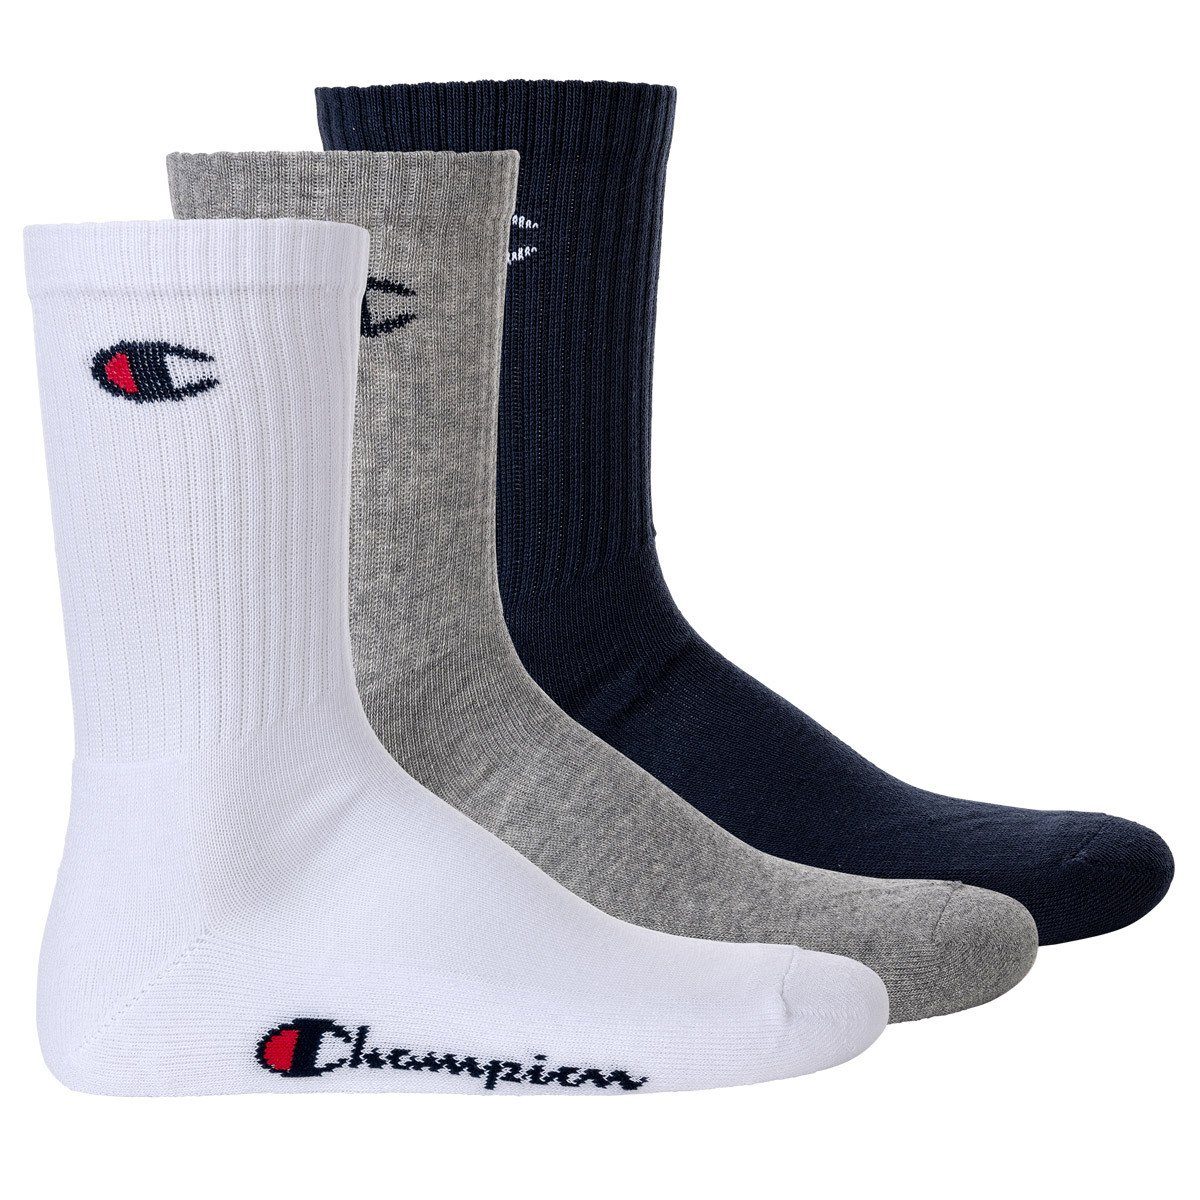 Paar - Champion Blau/Weiß/Grau Unisex Basic Sportsocken Socken, Crew Socken 3